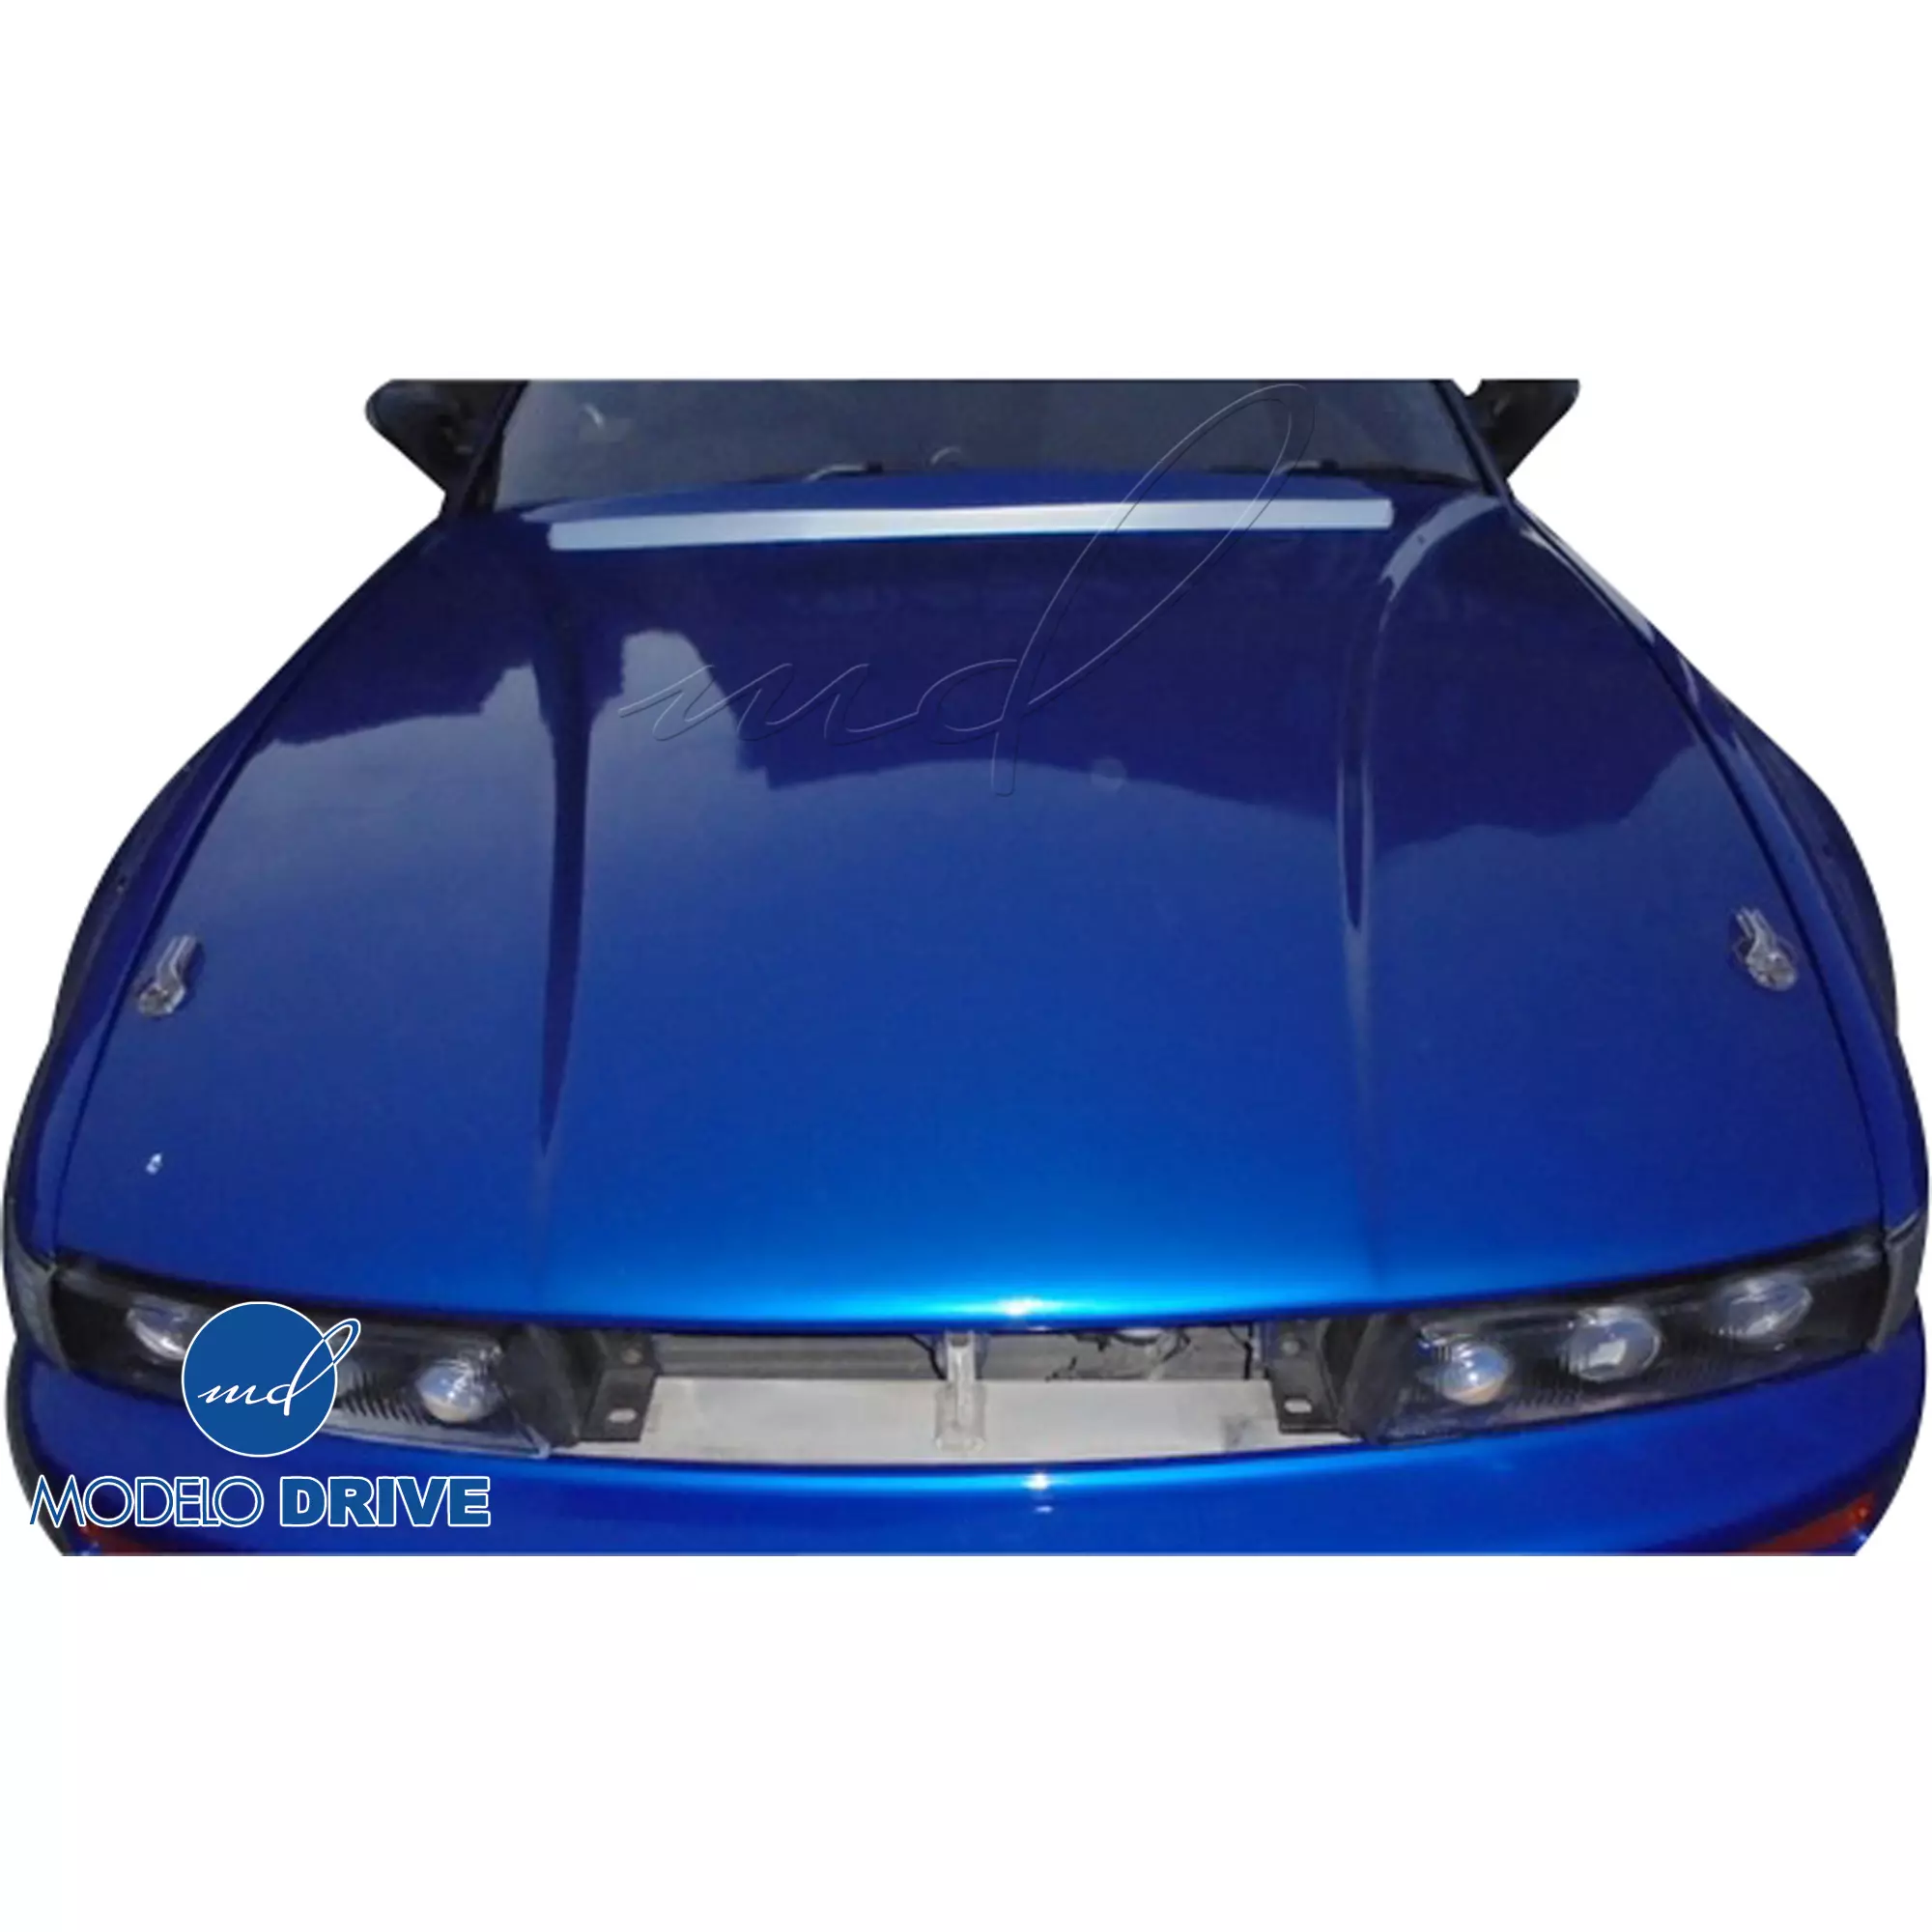 ModeloDrive FRP ORI v2 Hood > Nissan Silvia S13 1989-1994 - Image 31